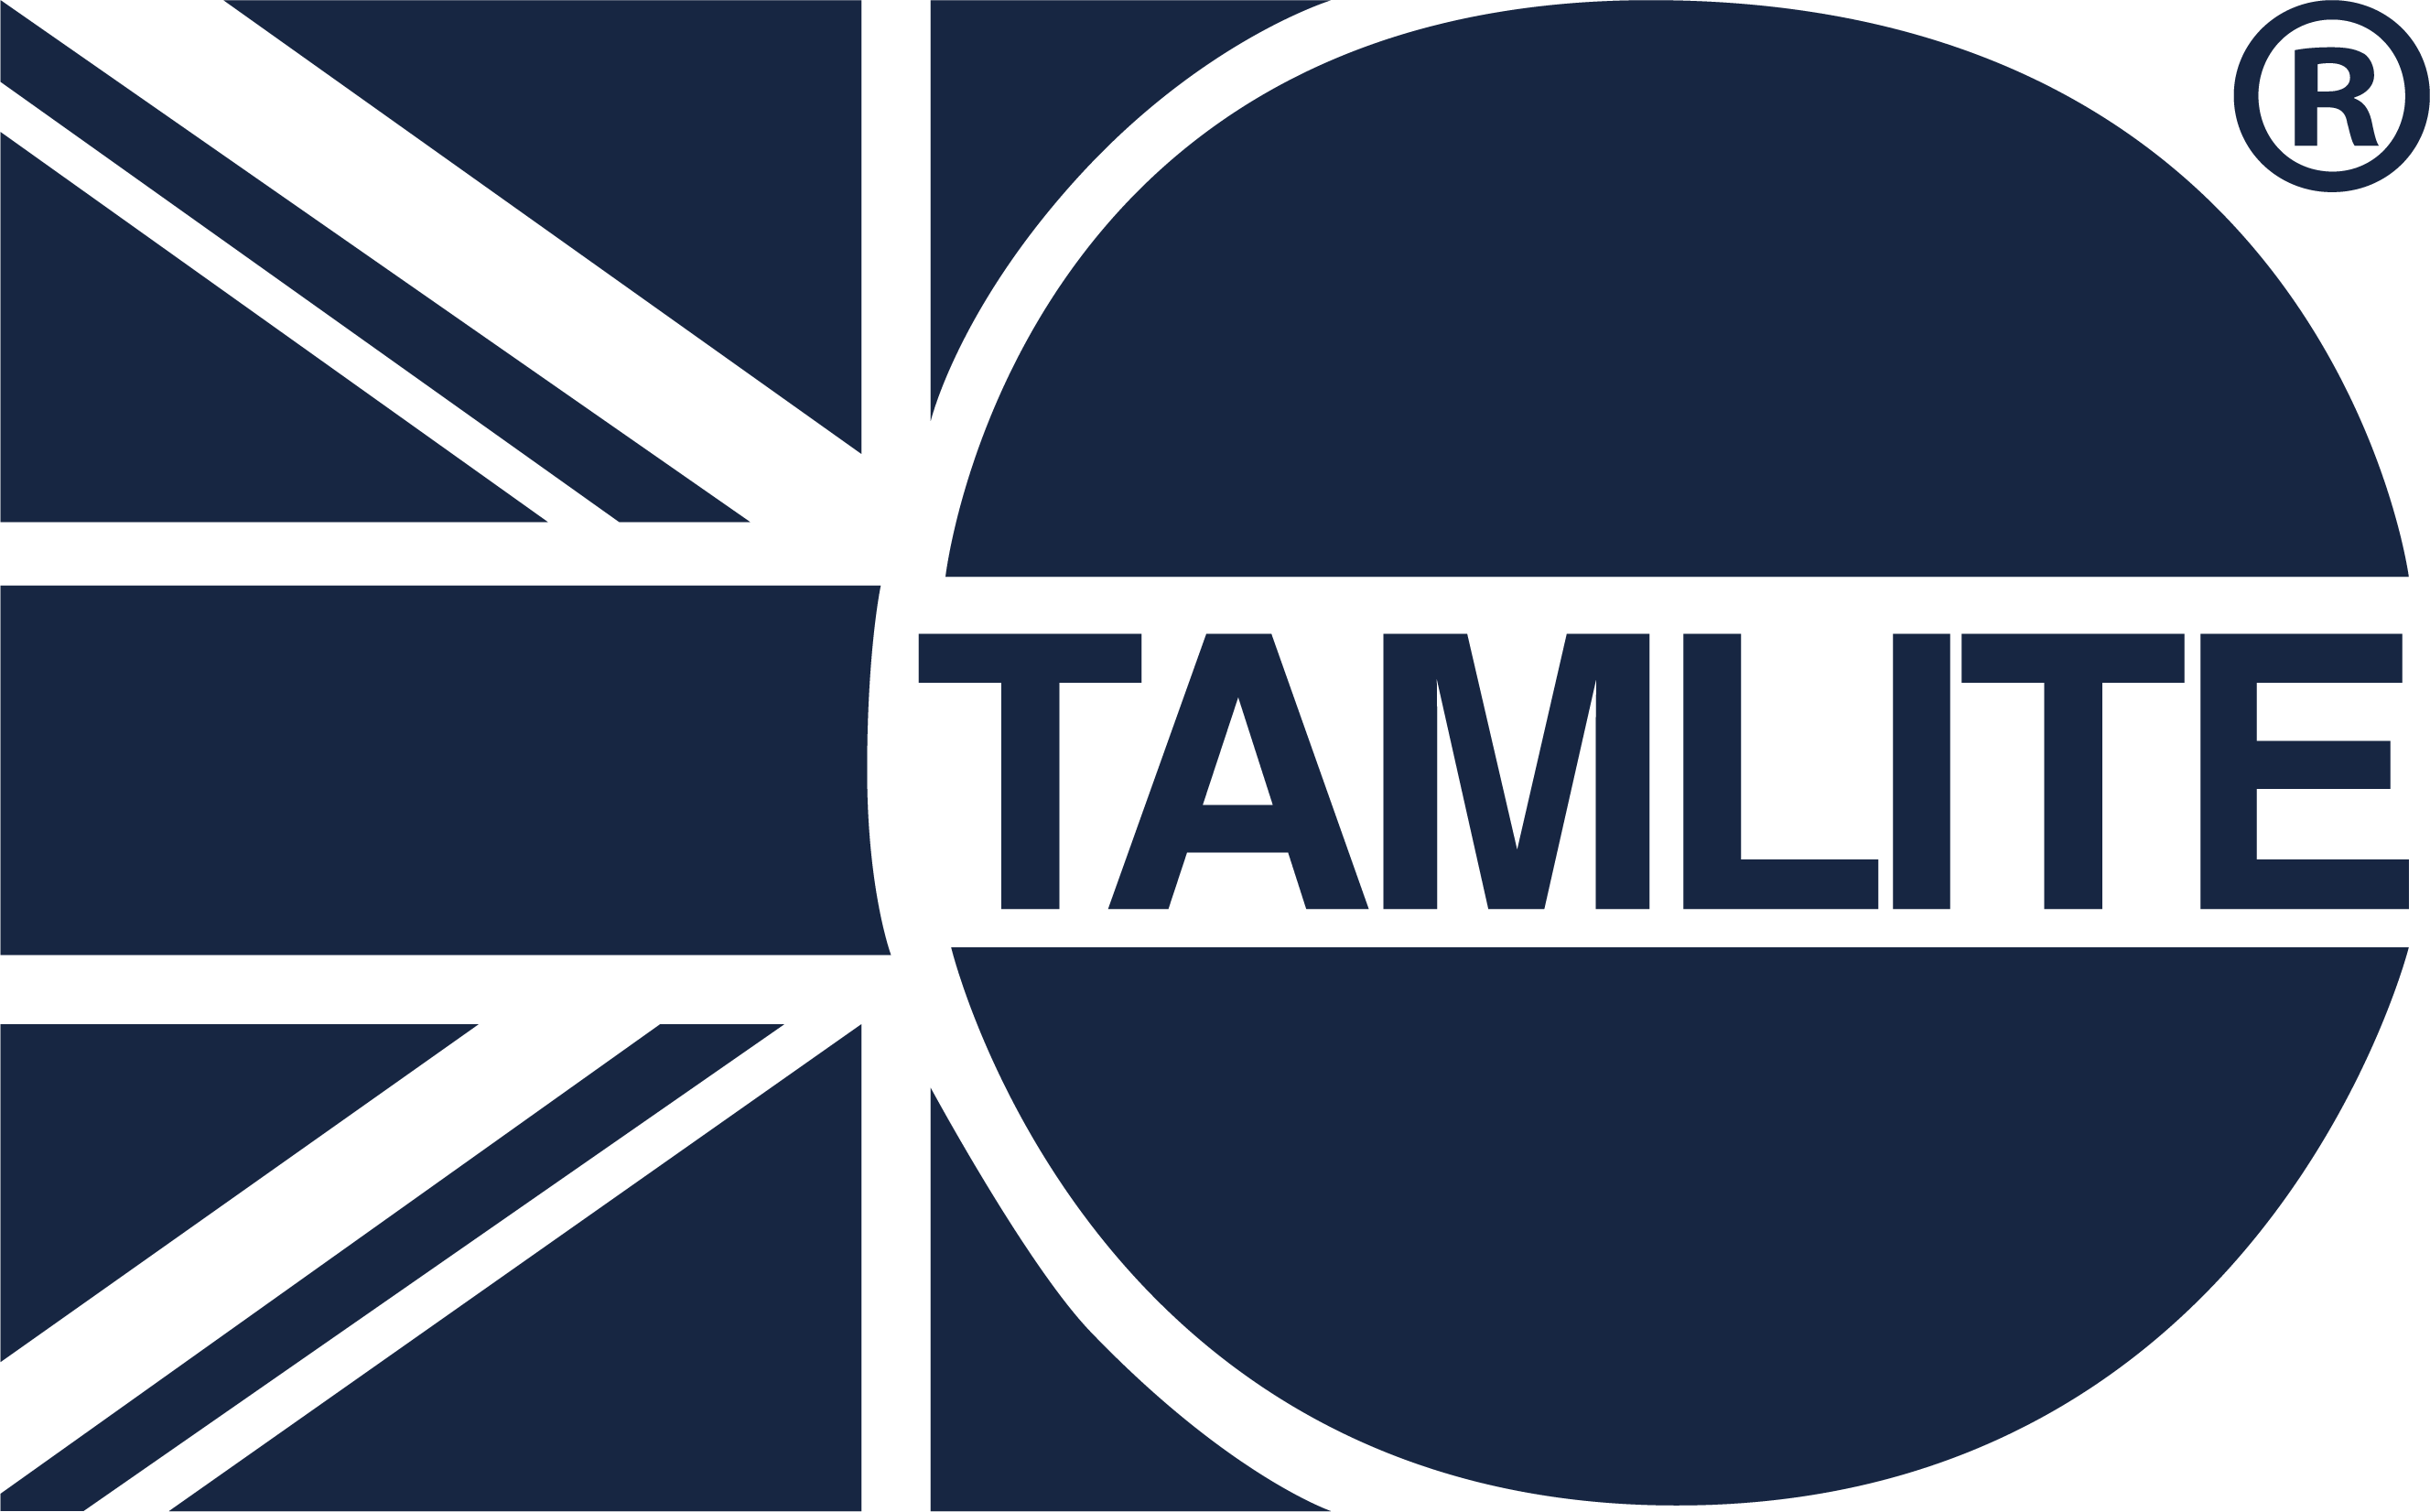 Tamlite Logo - Navy Blue